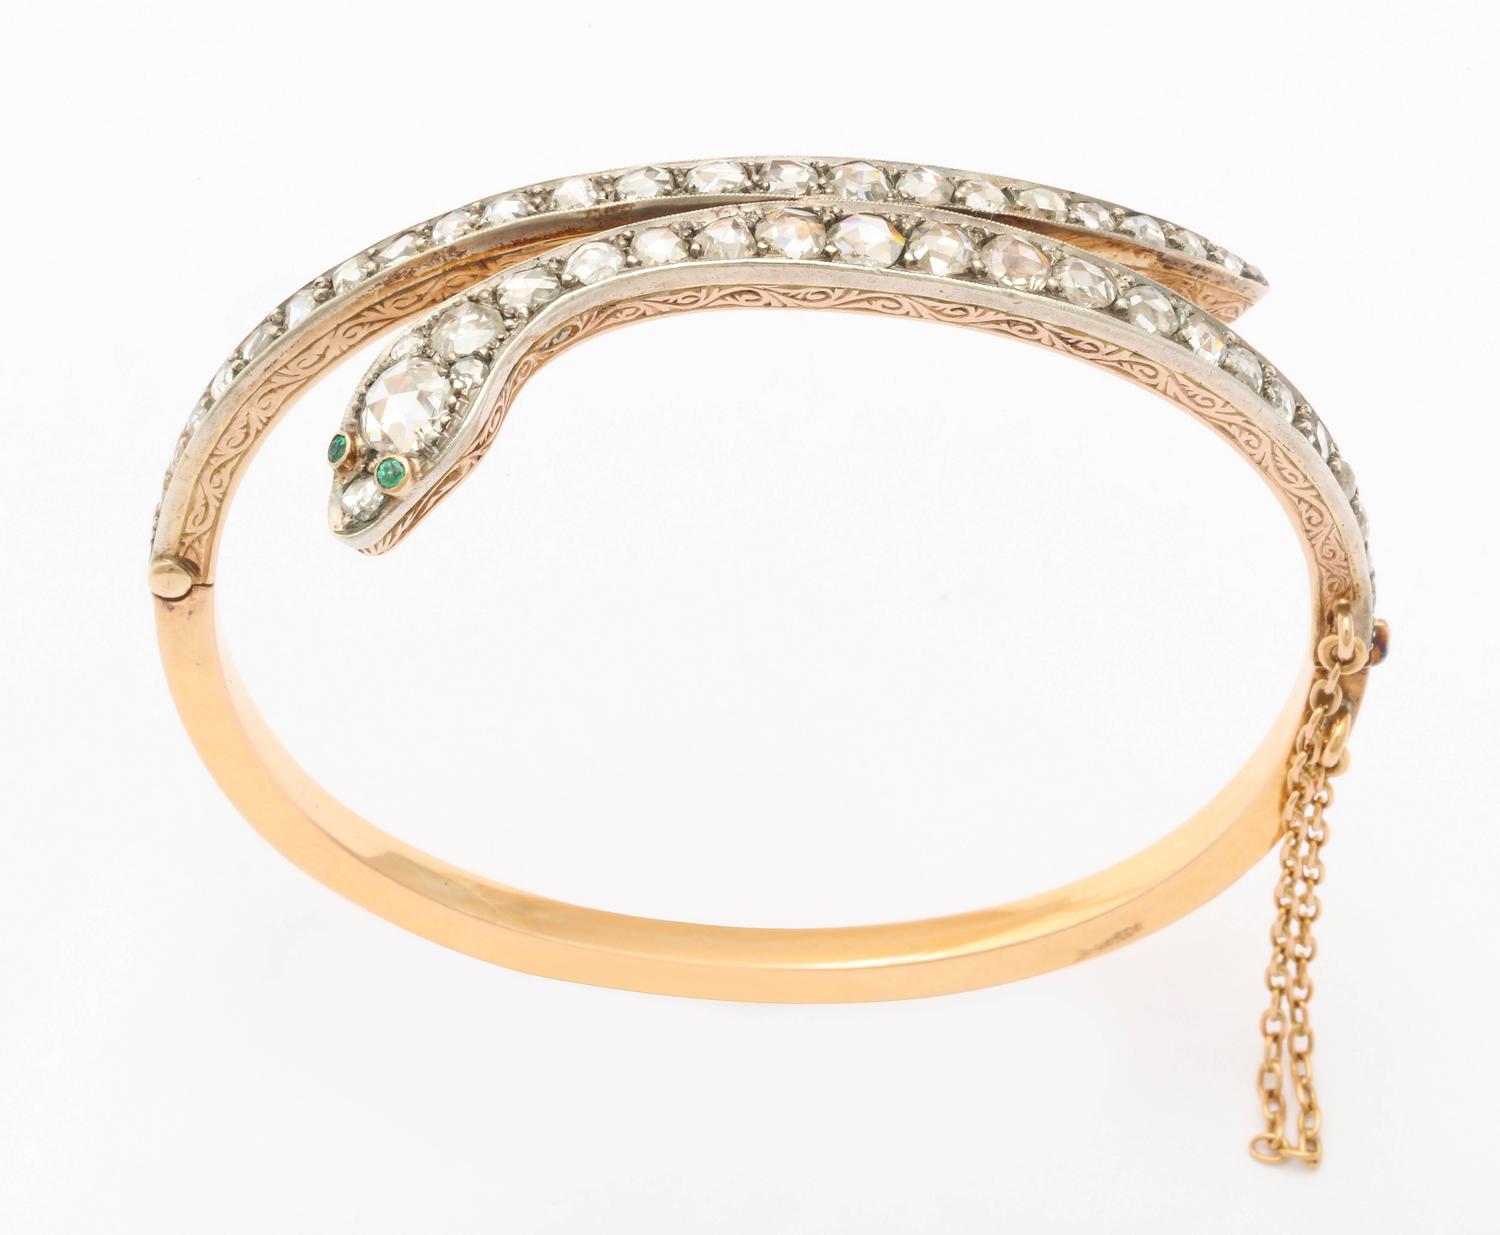 A Victorian Emerald Eyed Diamond Snake Bracelet For Sale at 1stdibs